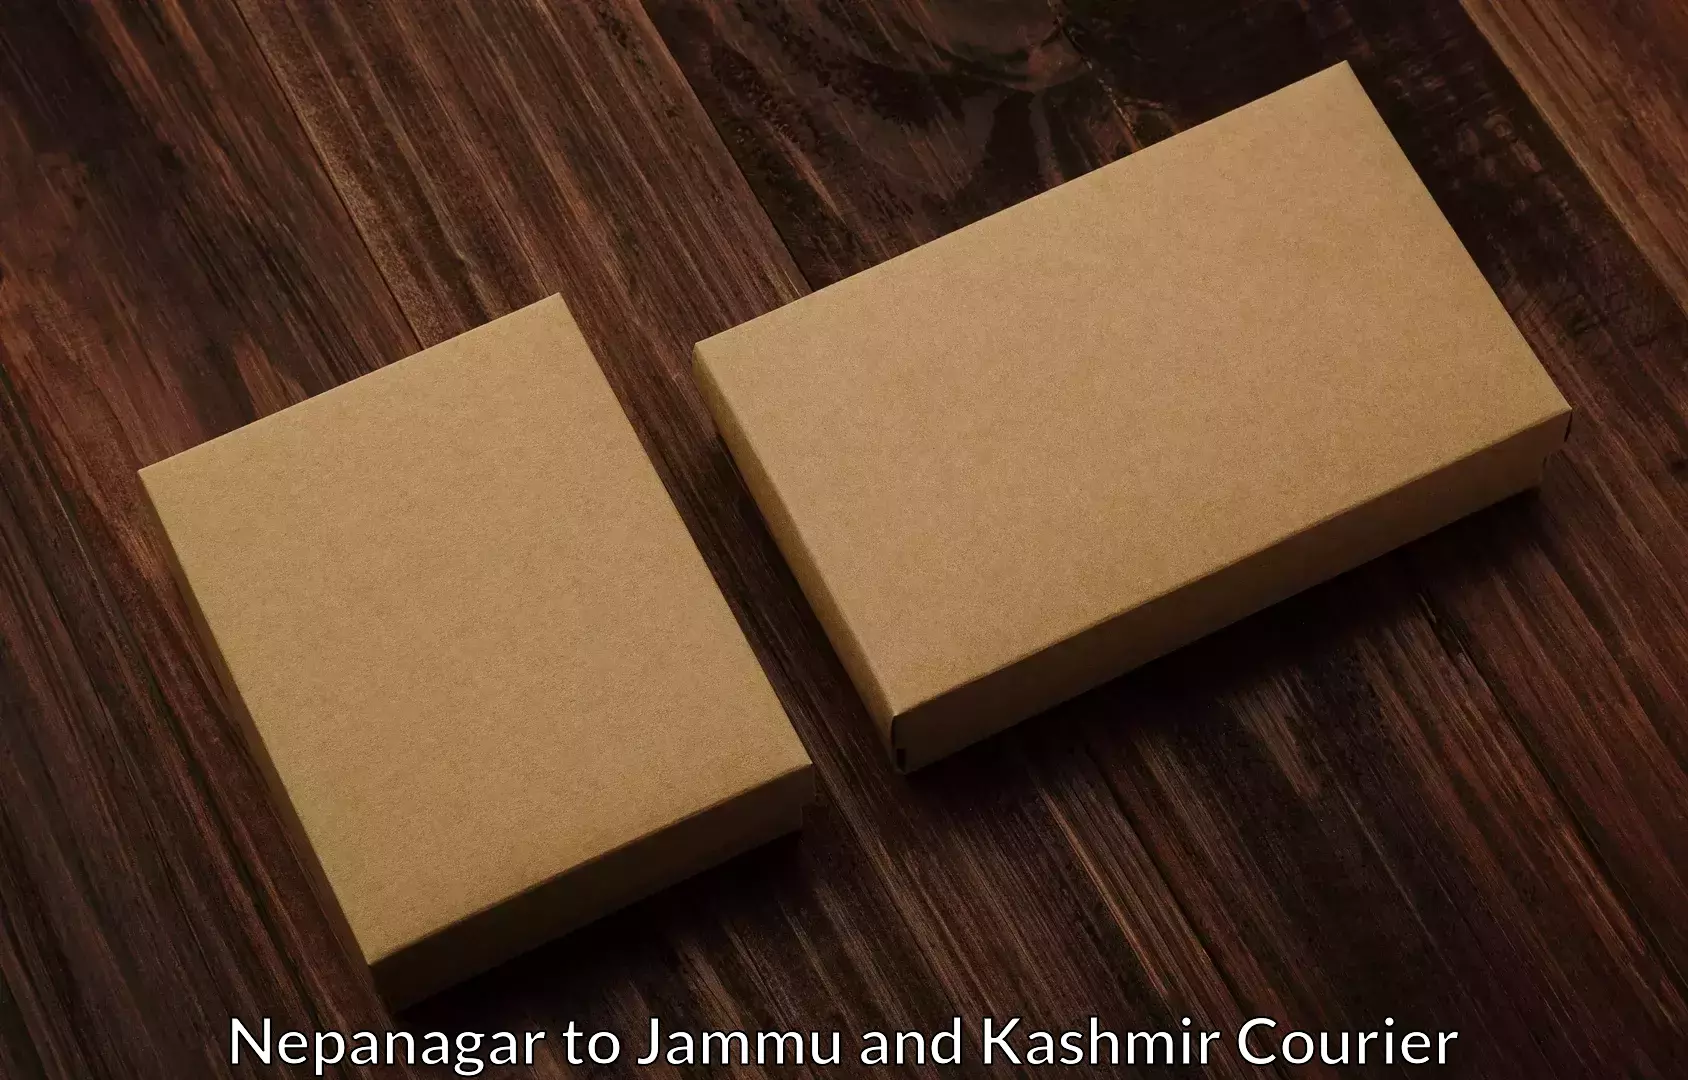 Home relocation experts Nepanagar to Jammu and Kashmir